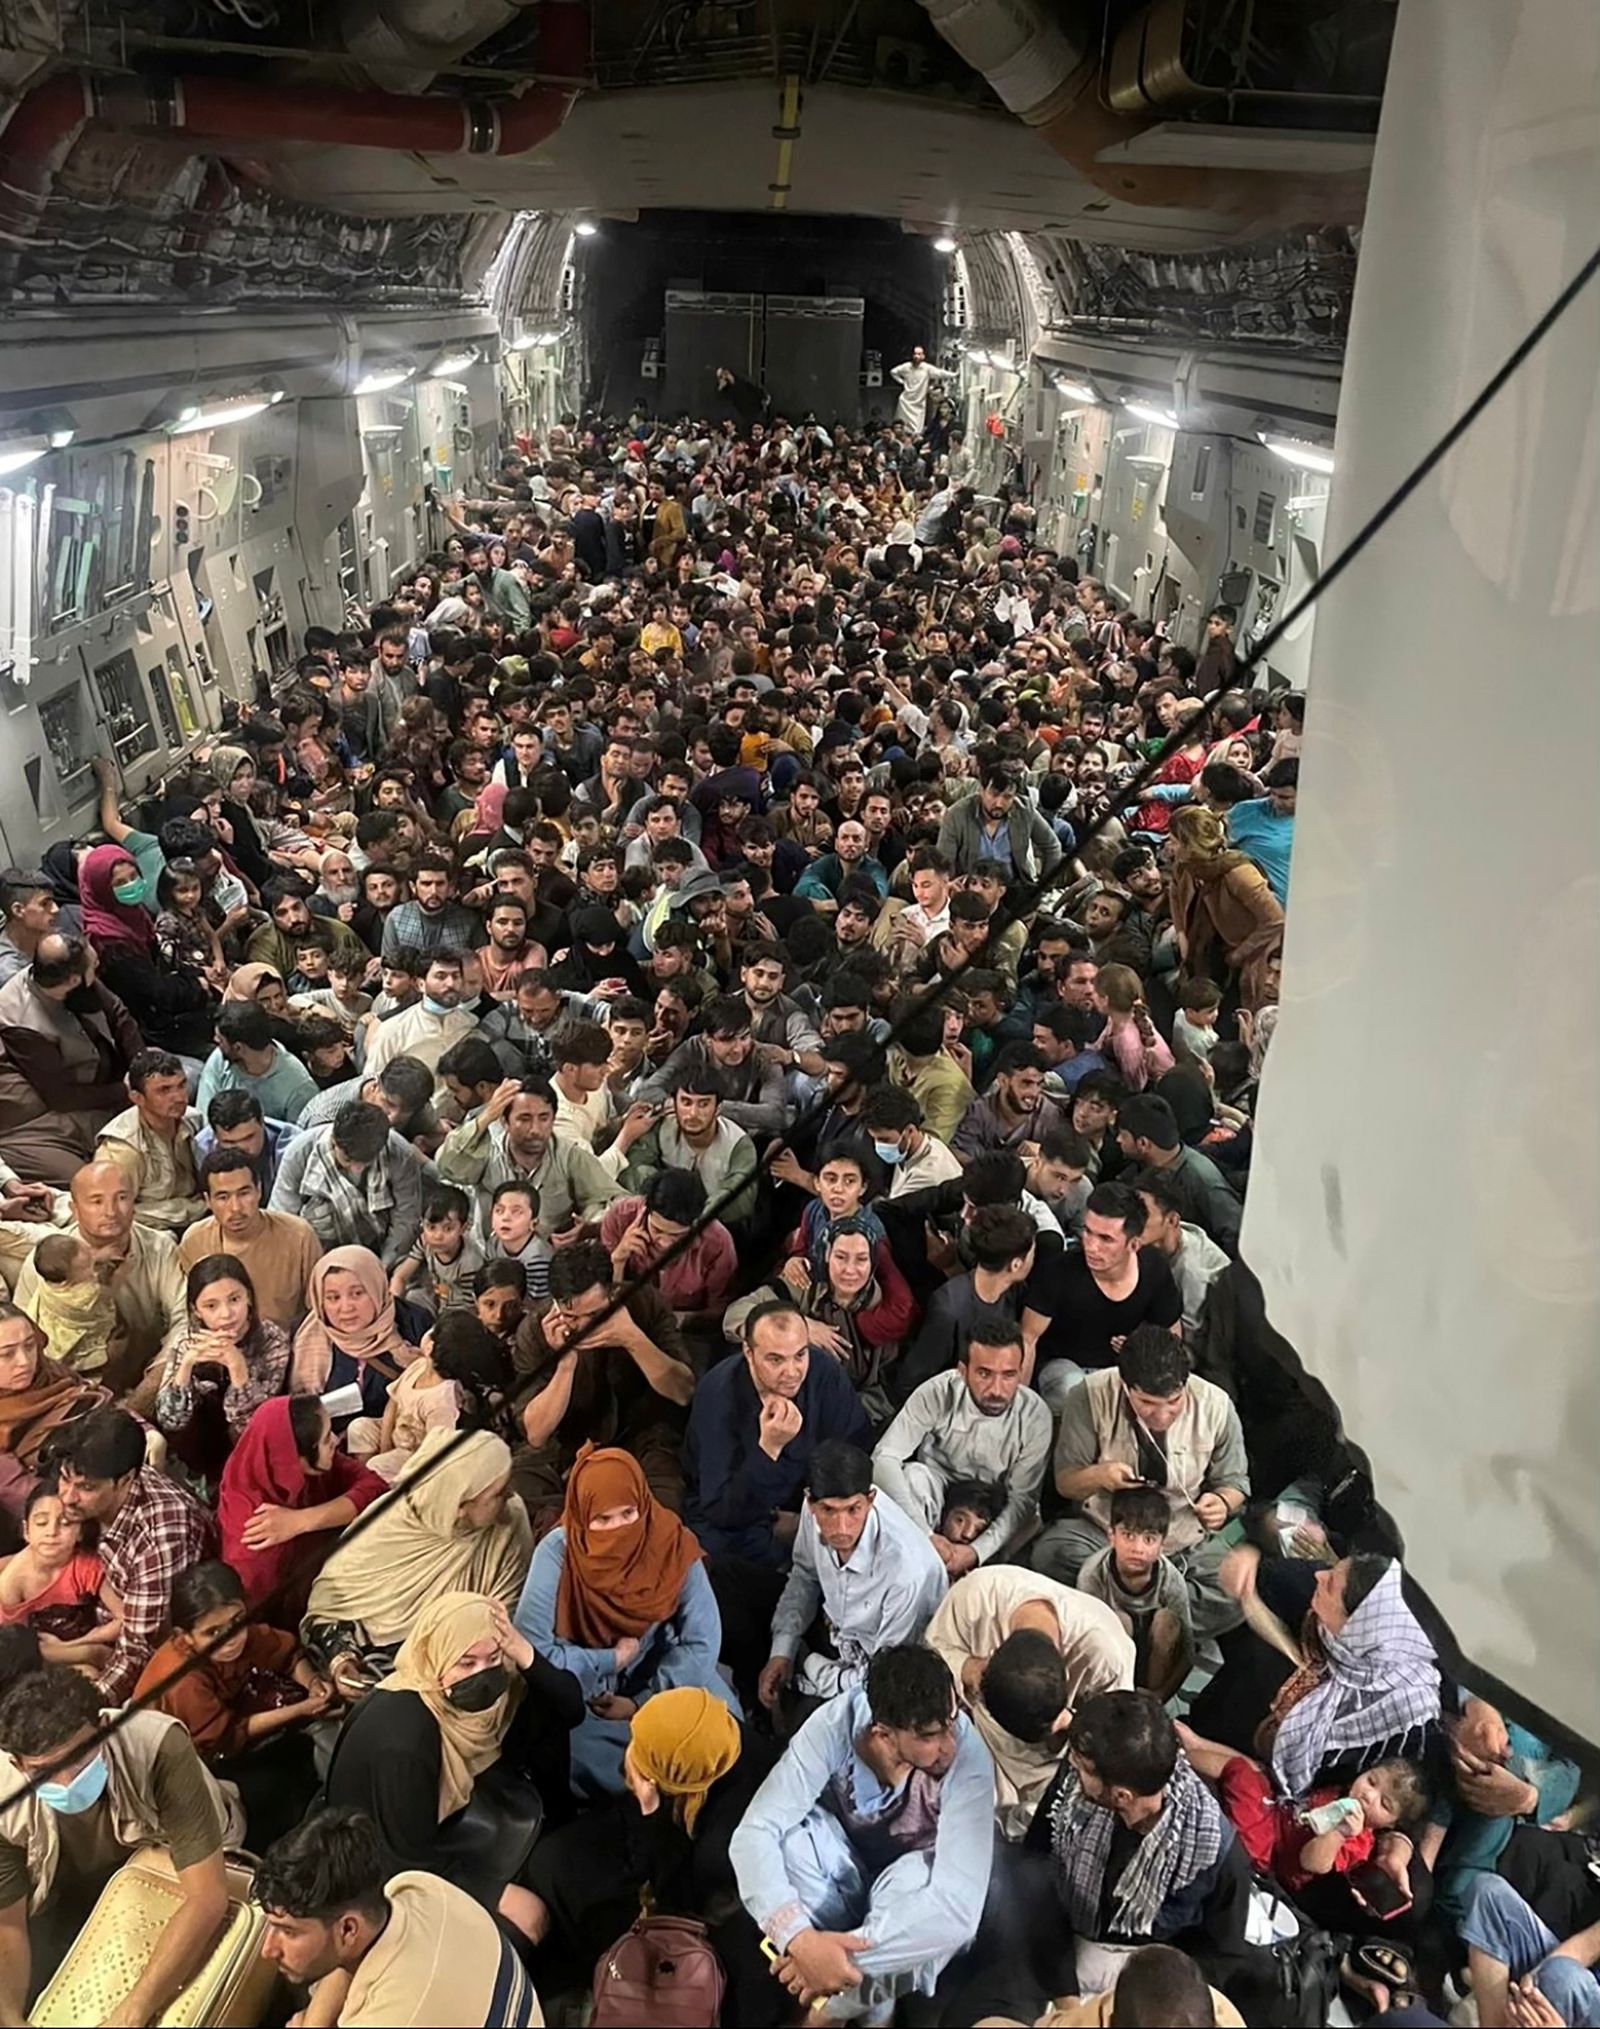 Evacuees crowd the interior of a U.S. Air Force C-17 Globemaster III transport aircraft departing Kabul - via REUTERS